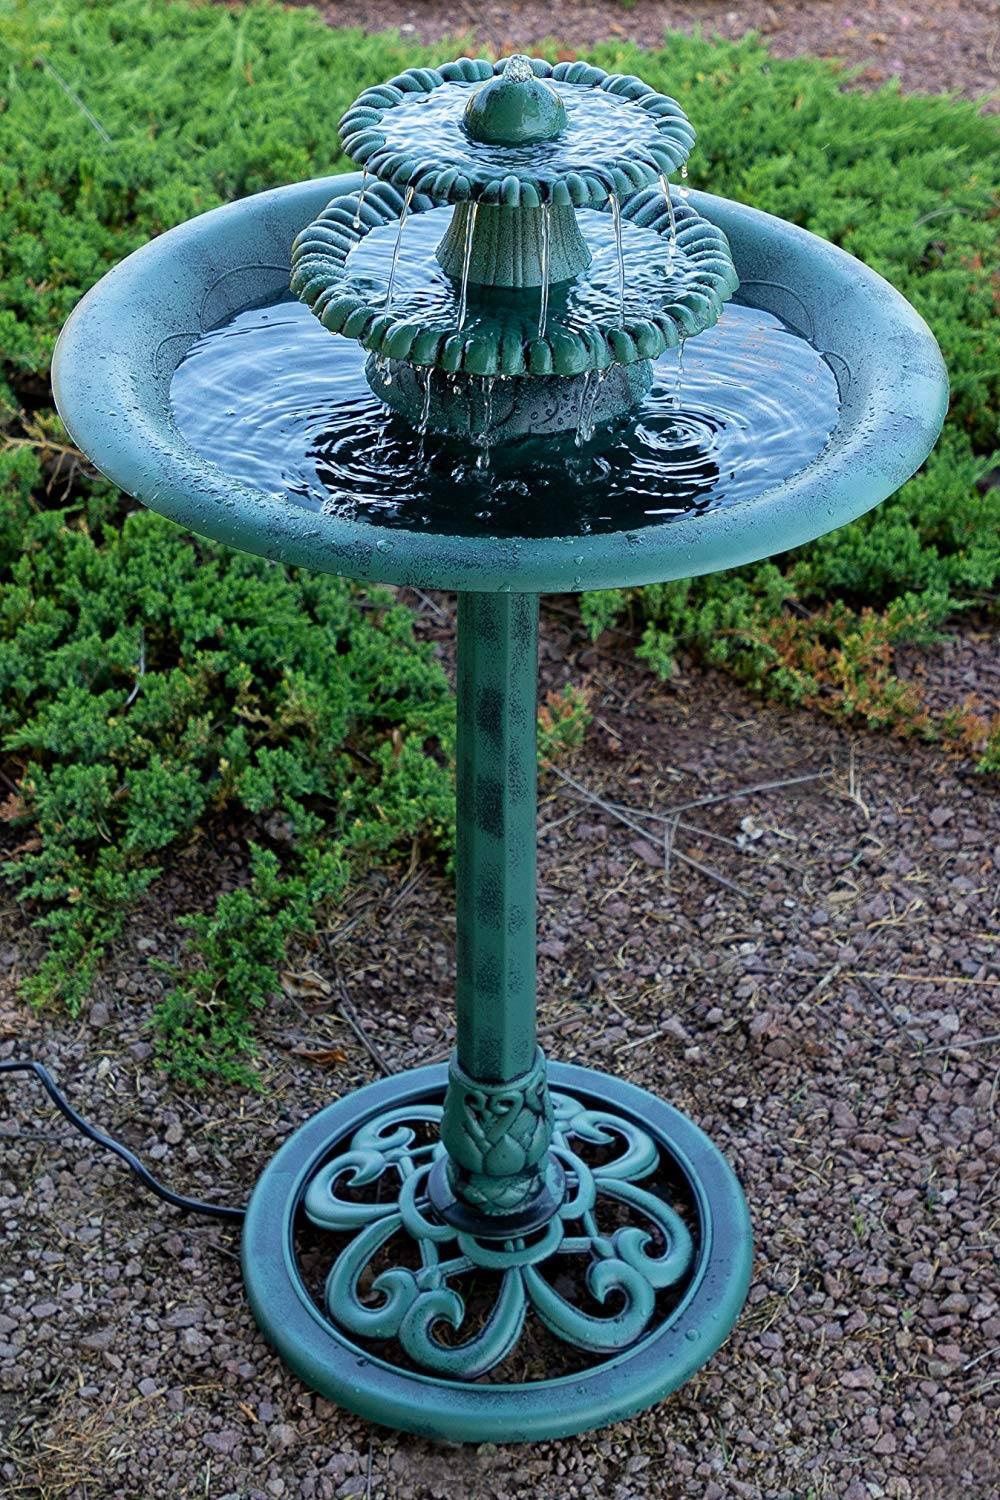 Antique 3 Tier Fountain Bird Bath With Pump Water Ornament Garden Yard Outdoor